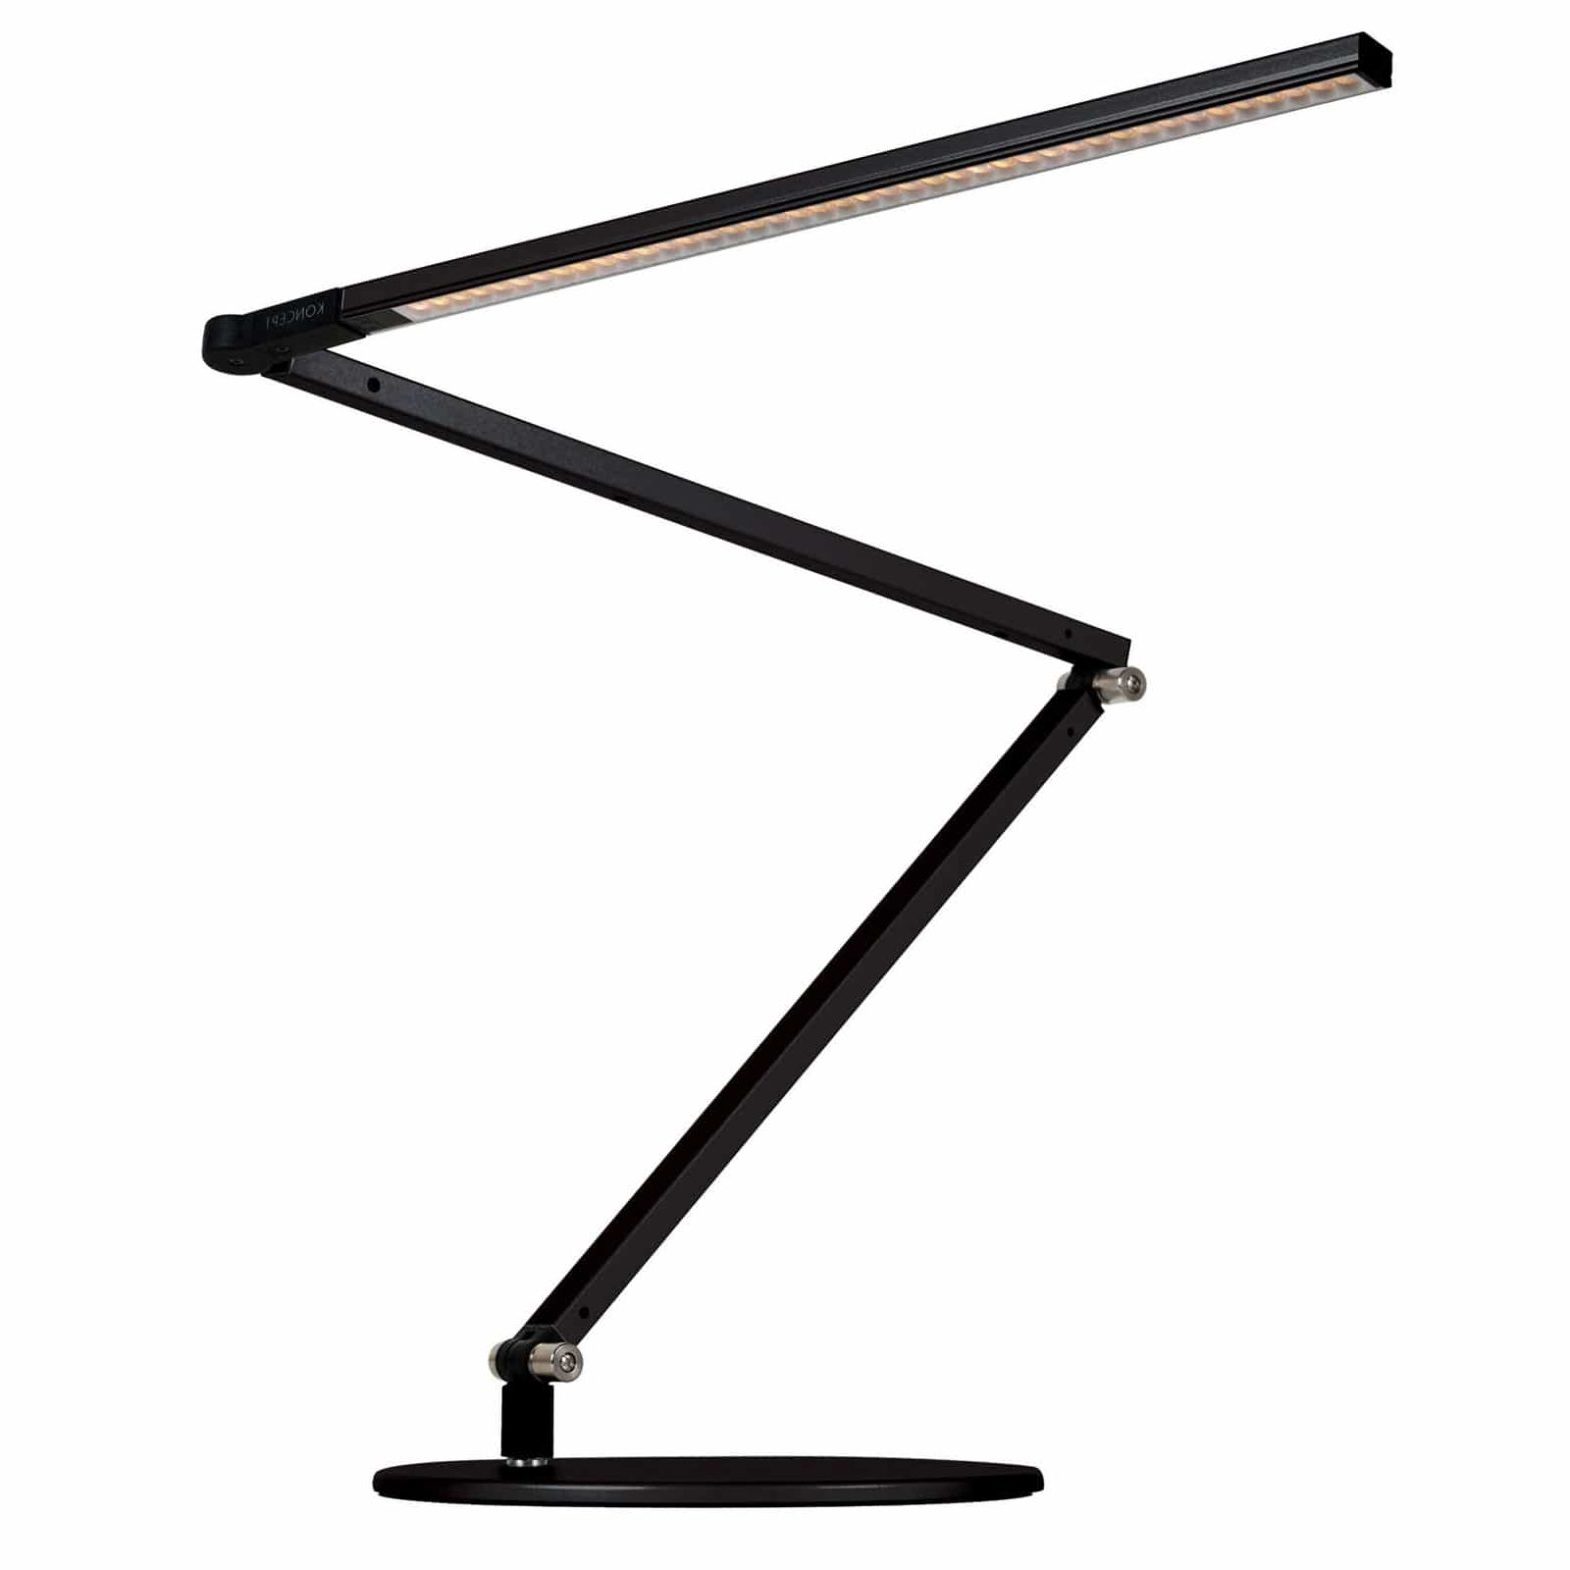 Koncept Z-Bar Desk Lamp Green: Illuminating Elegance and Efficiency